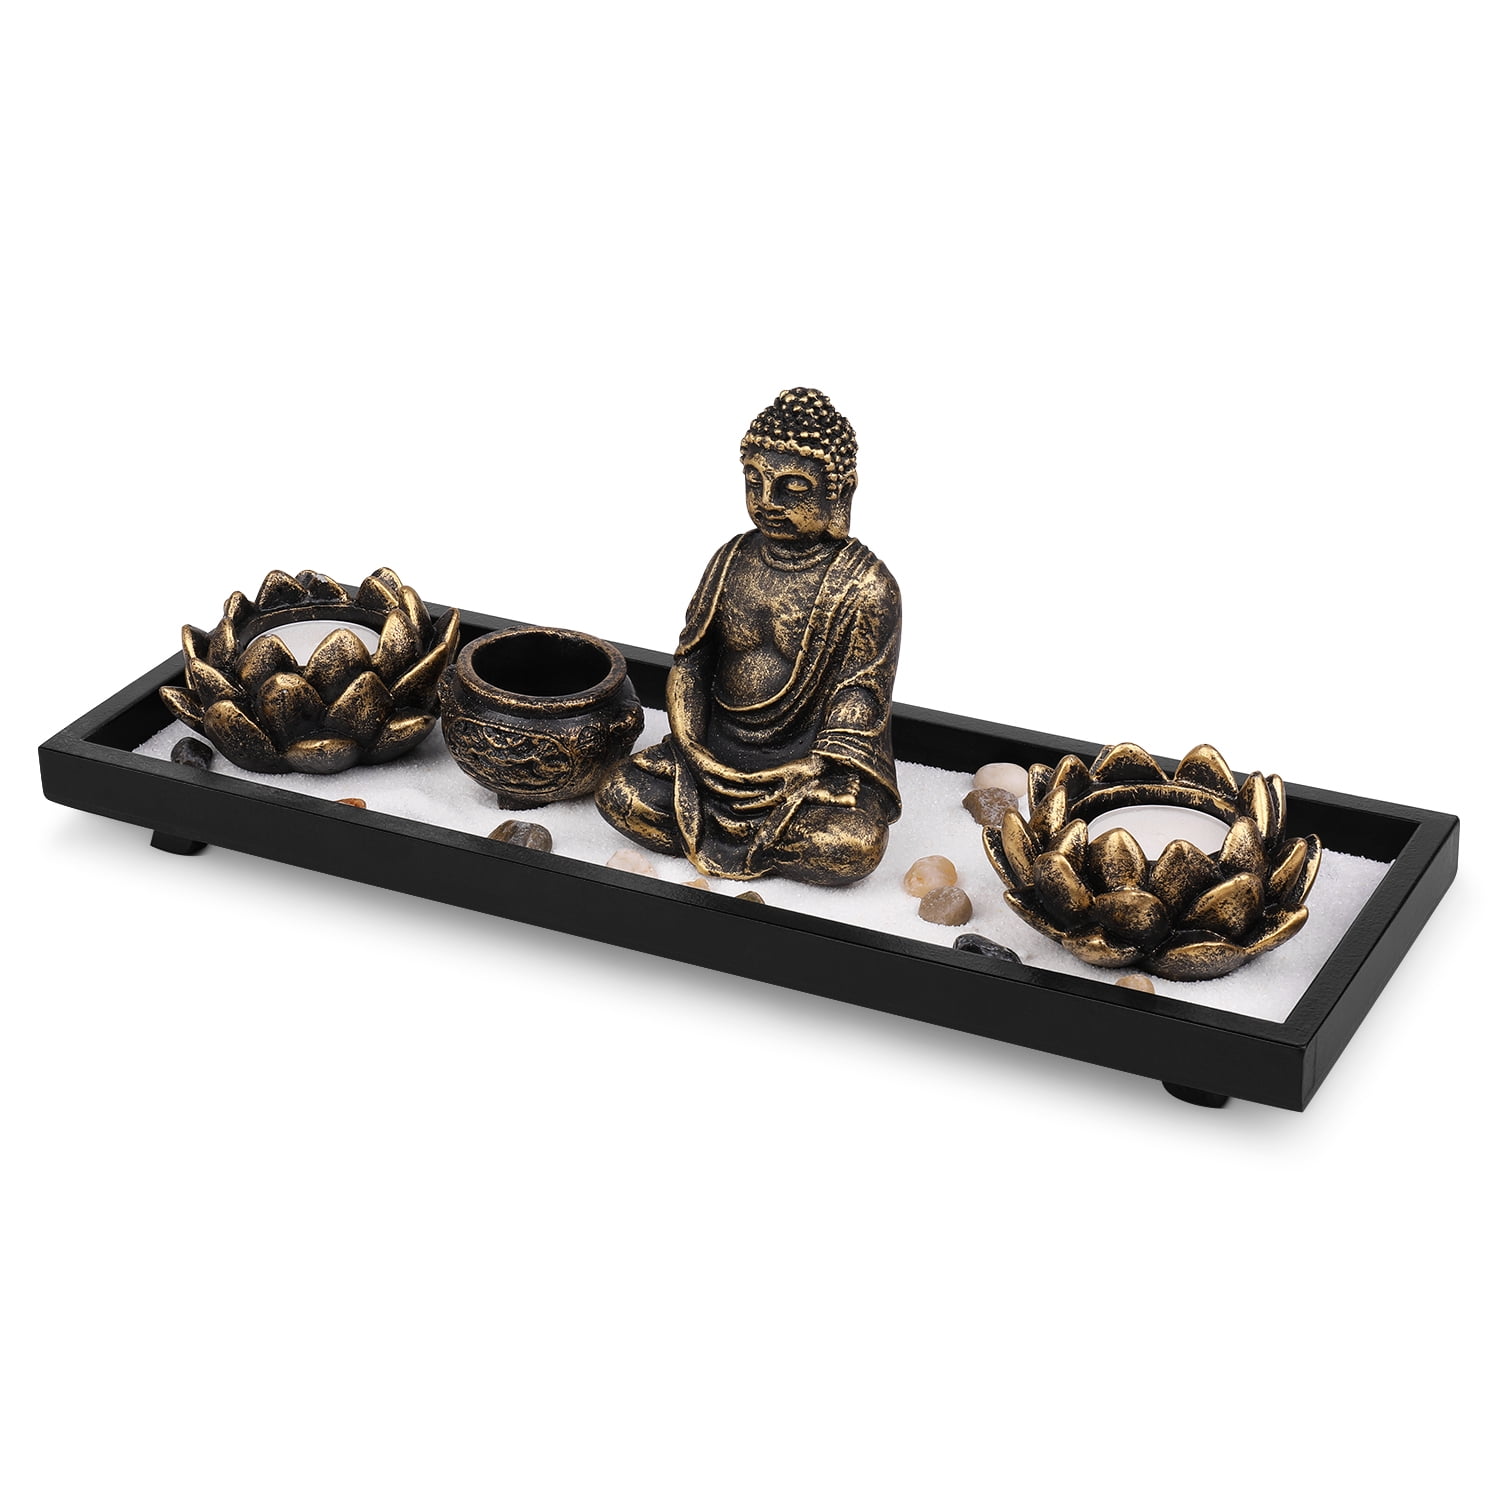 Mini Zen Garden Buddha Statues Stress Relief Relaxation Home Tabletop Decor 